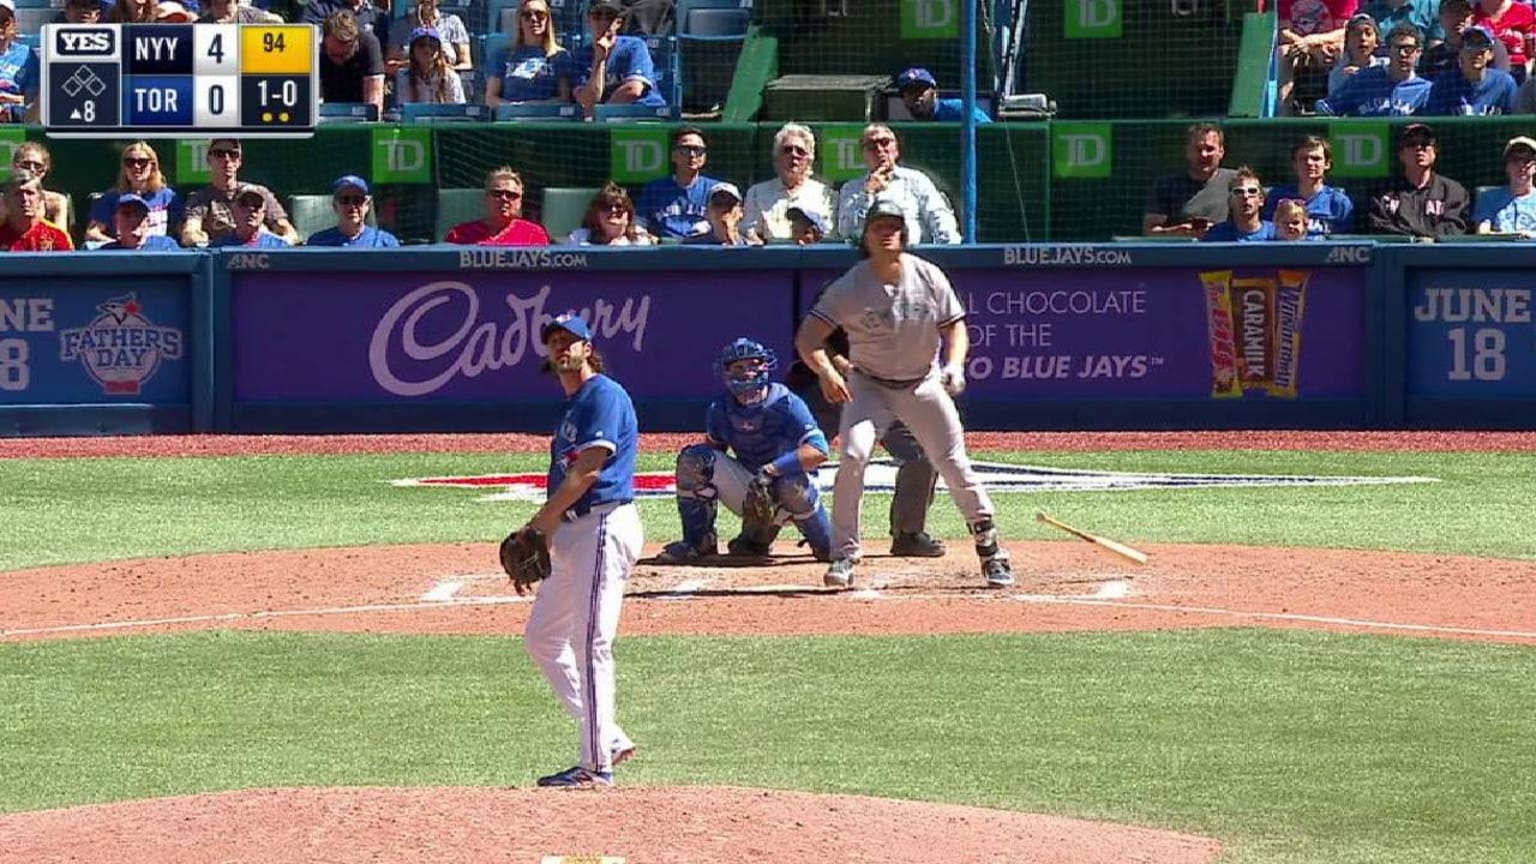 Matt Holliday Surprises Cancer Patient With Home Run Ball